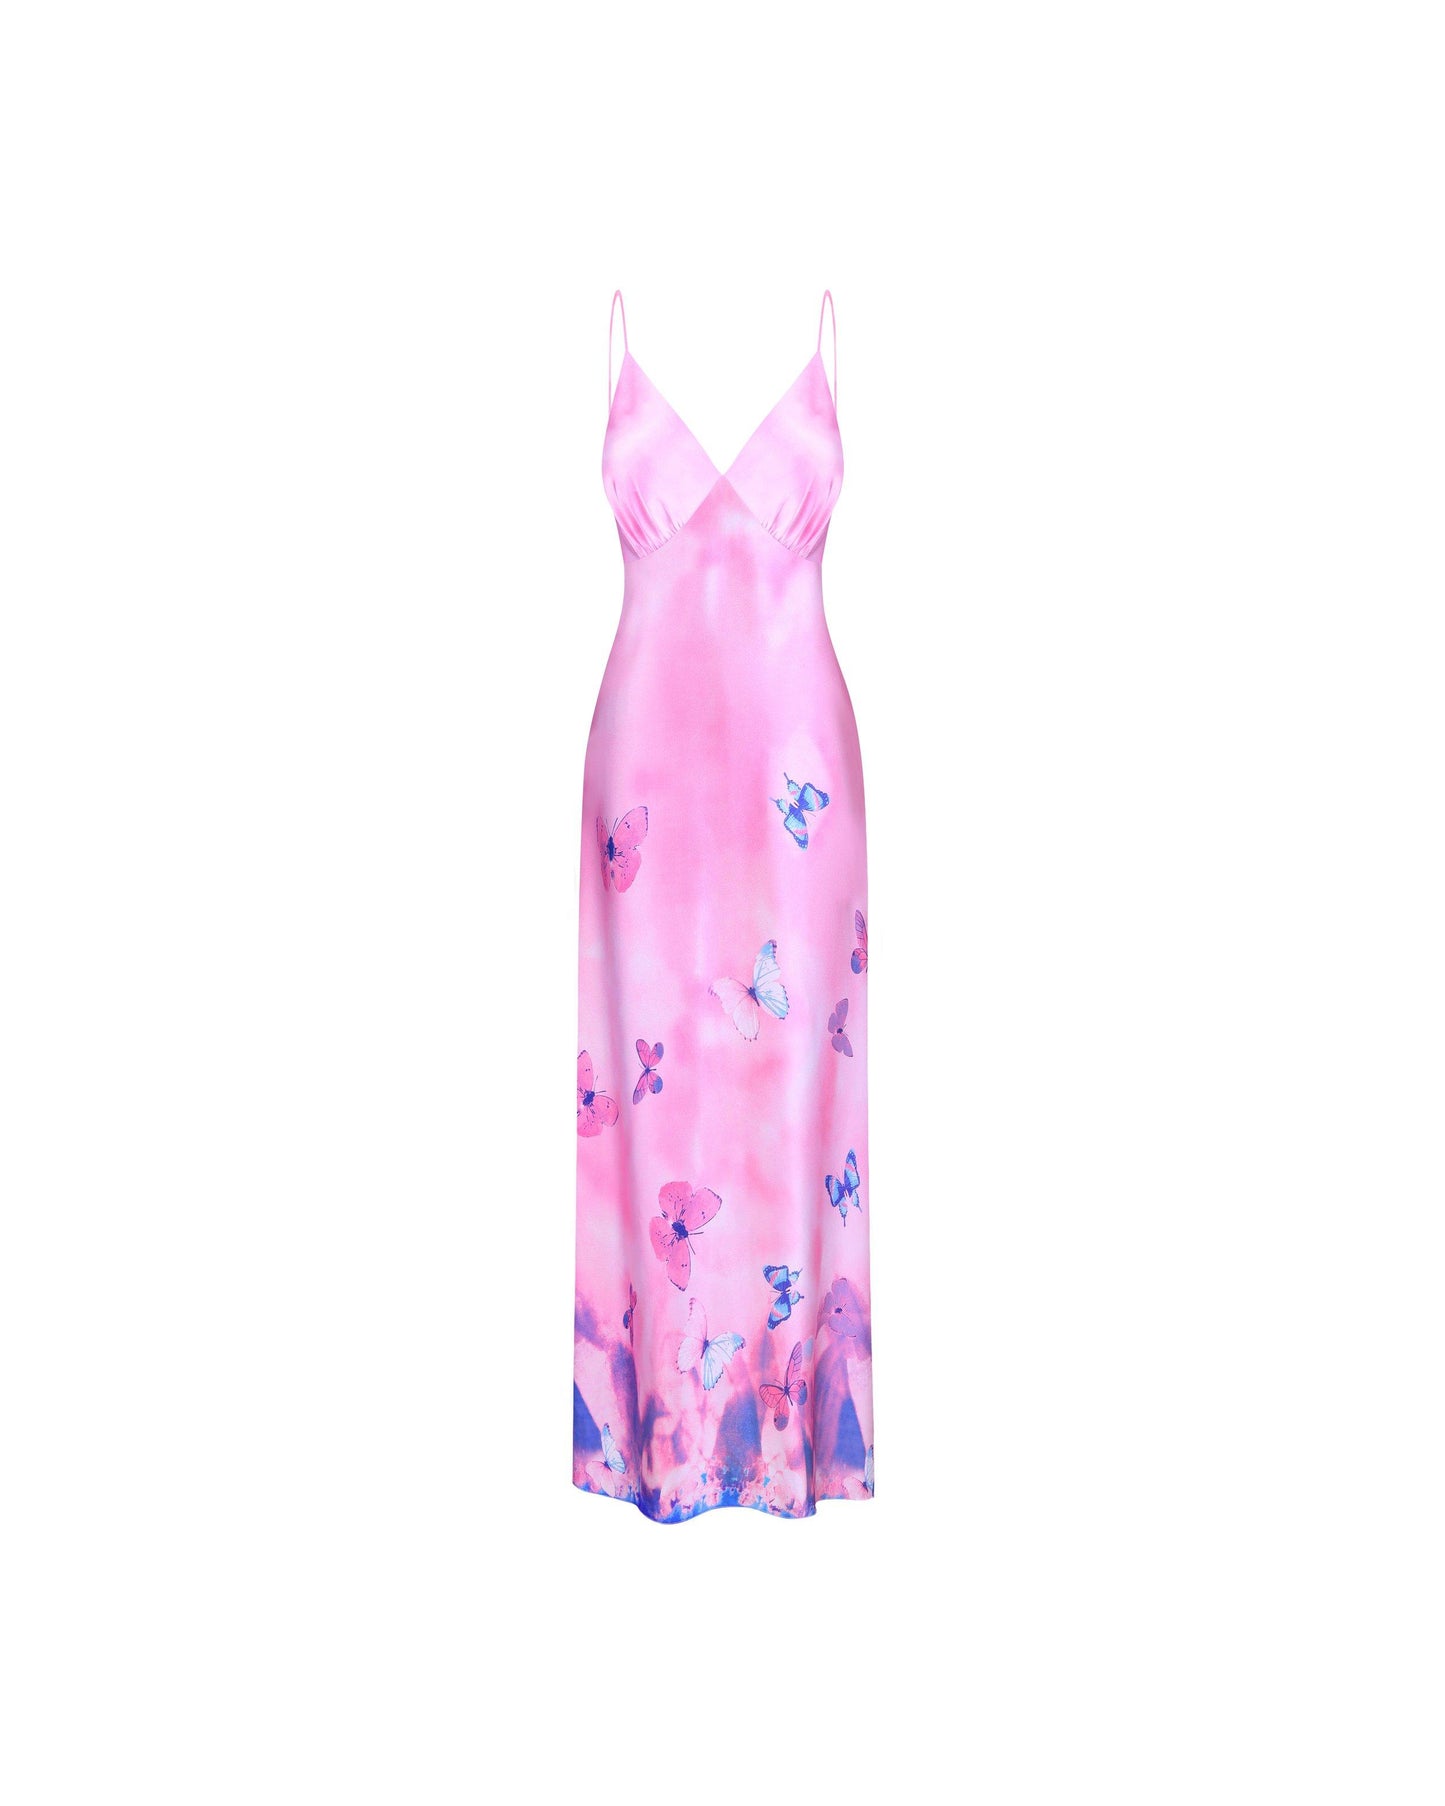 Signature Slip Dress (Pink Meadow) - Stolen Studios x Onarin